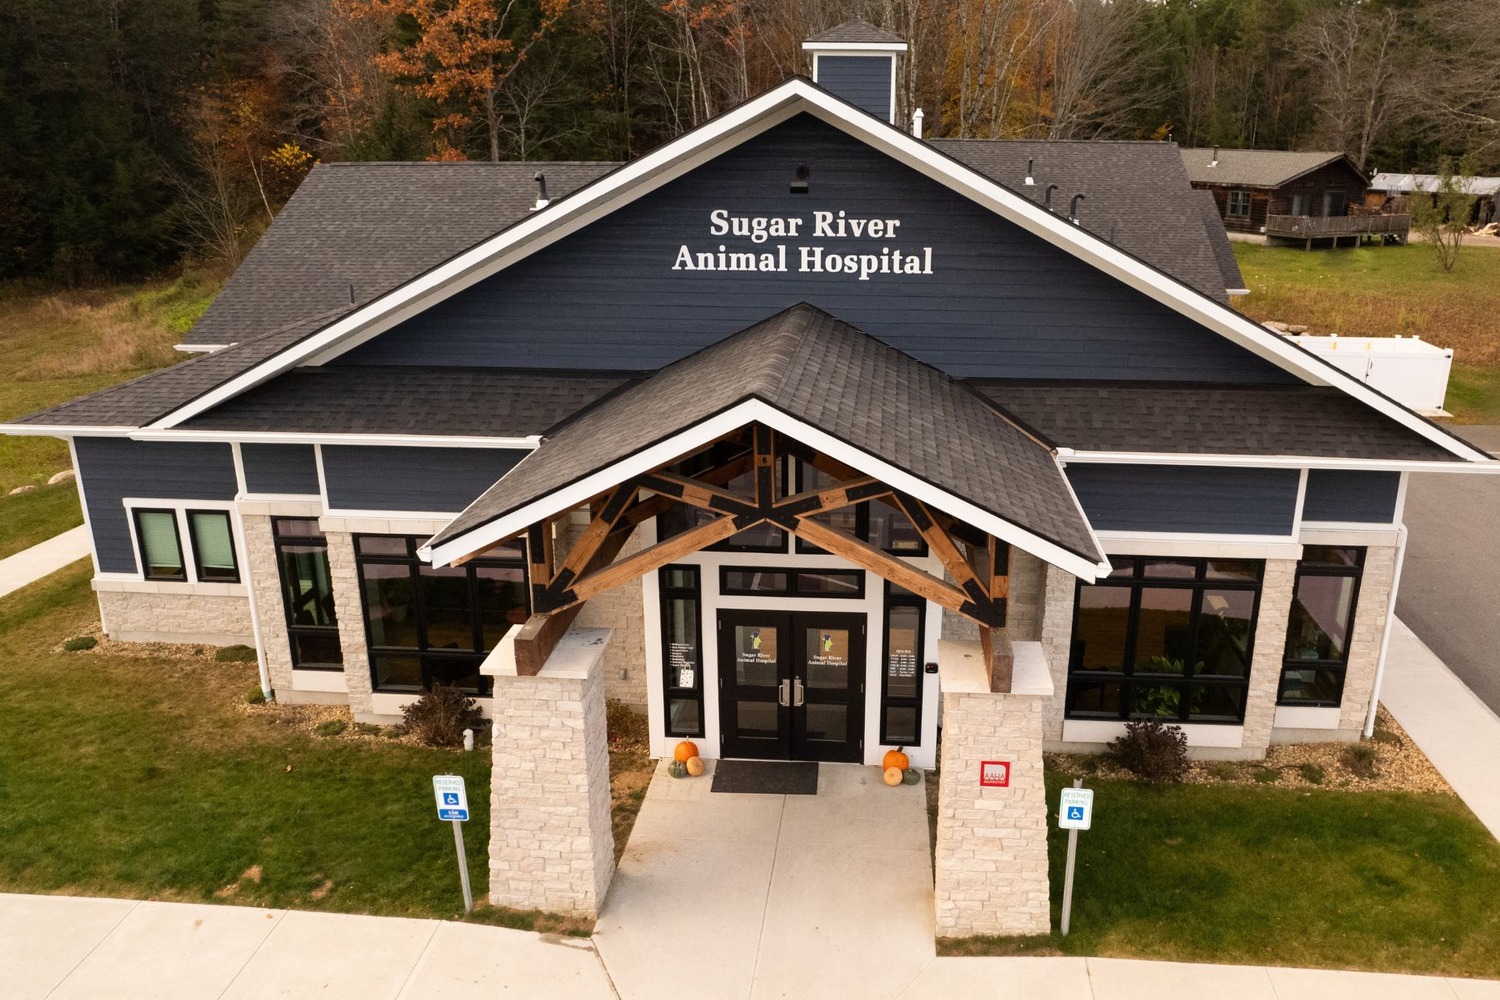 About Sugar River Animal Hospital